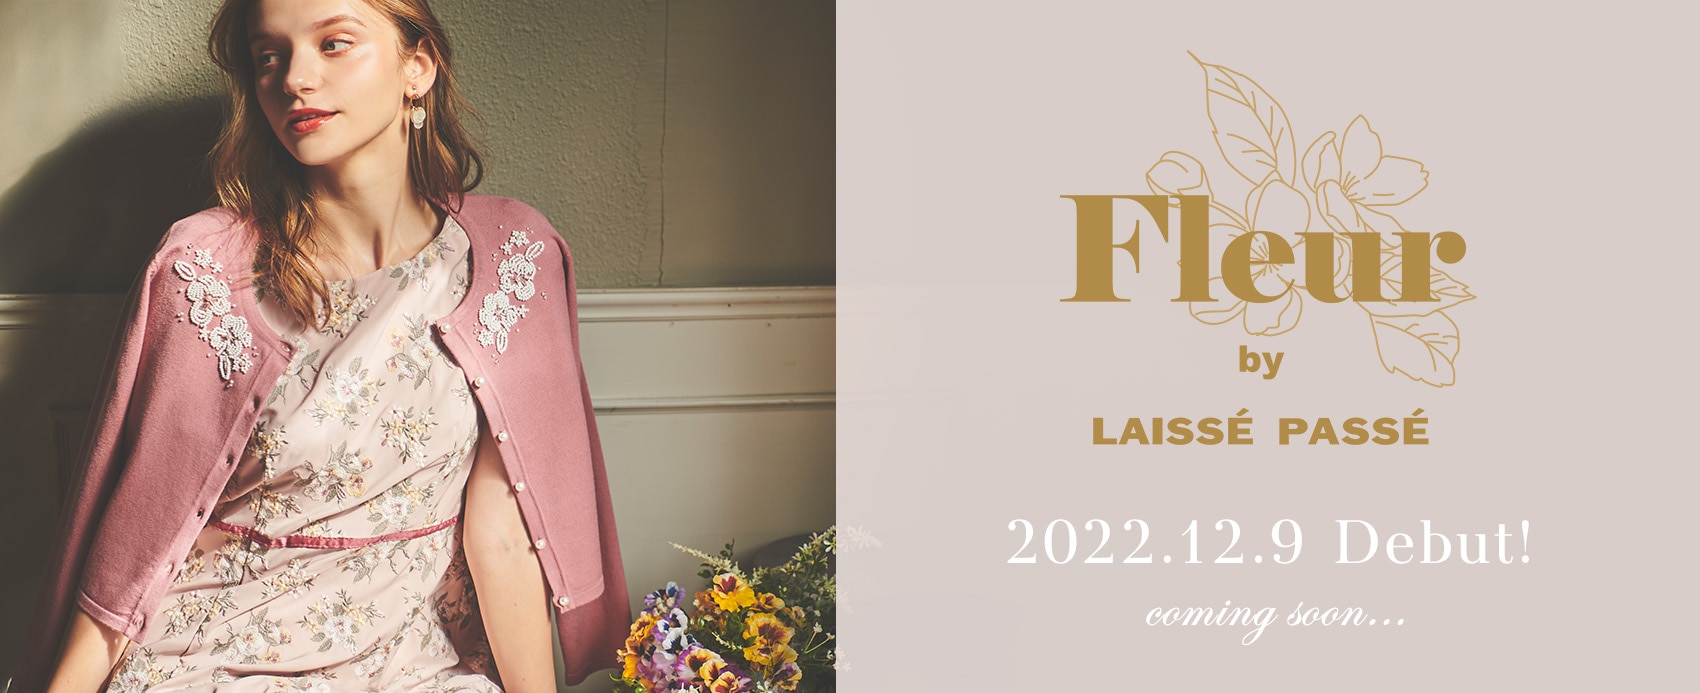 Fleur by LAISSE PASSE 2022.12.9 Debut! coming soon